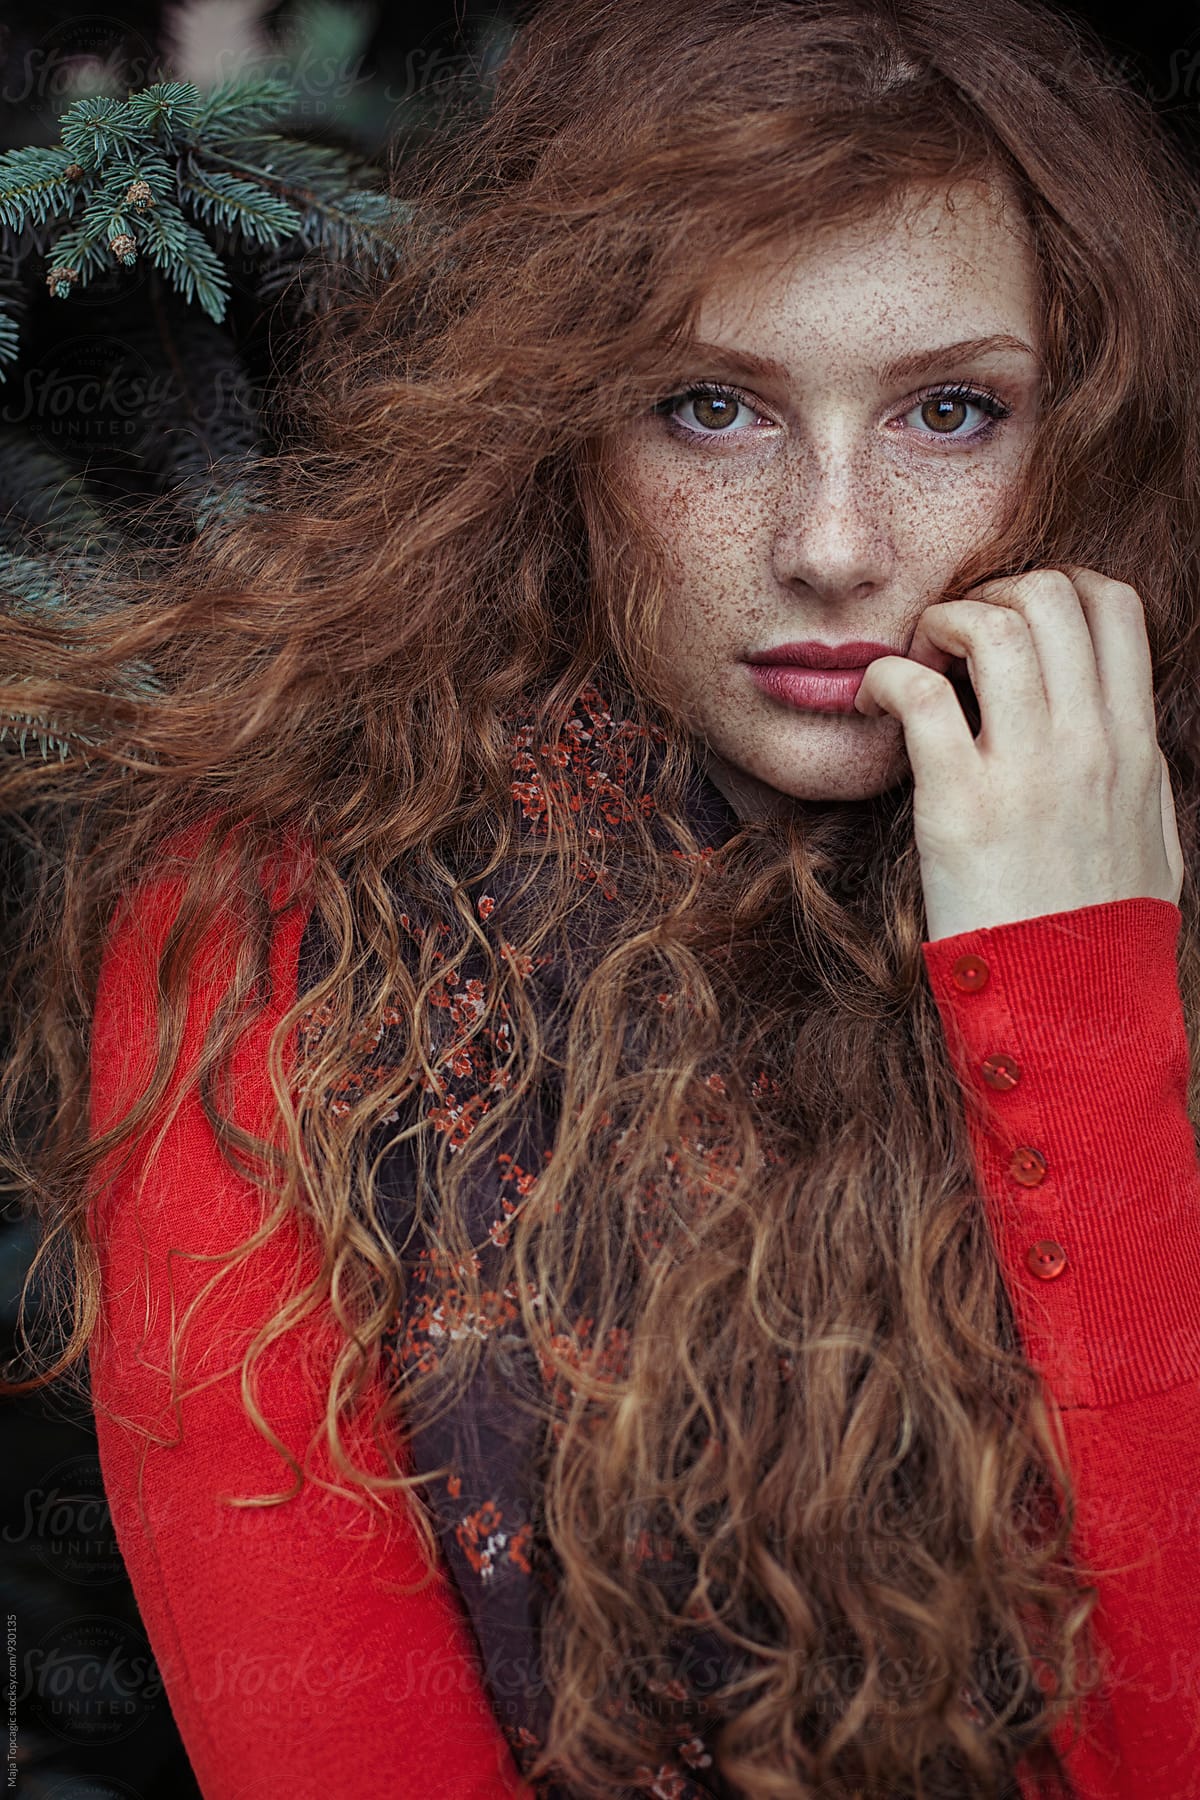 Portrait Of A Beautiful Redhead With Freckles By Stocksy Contributor Maja Topcagic Stocksy